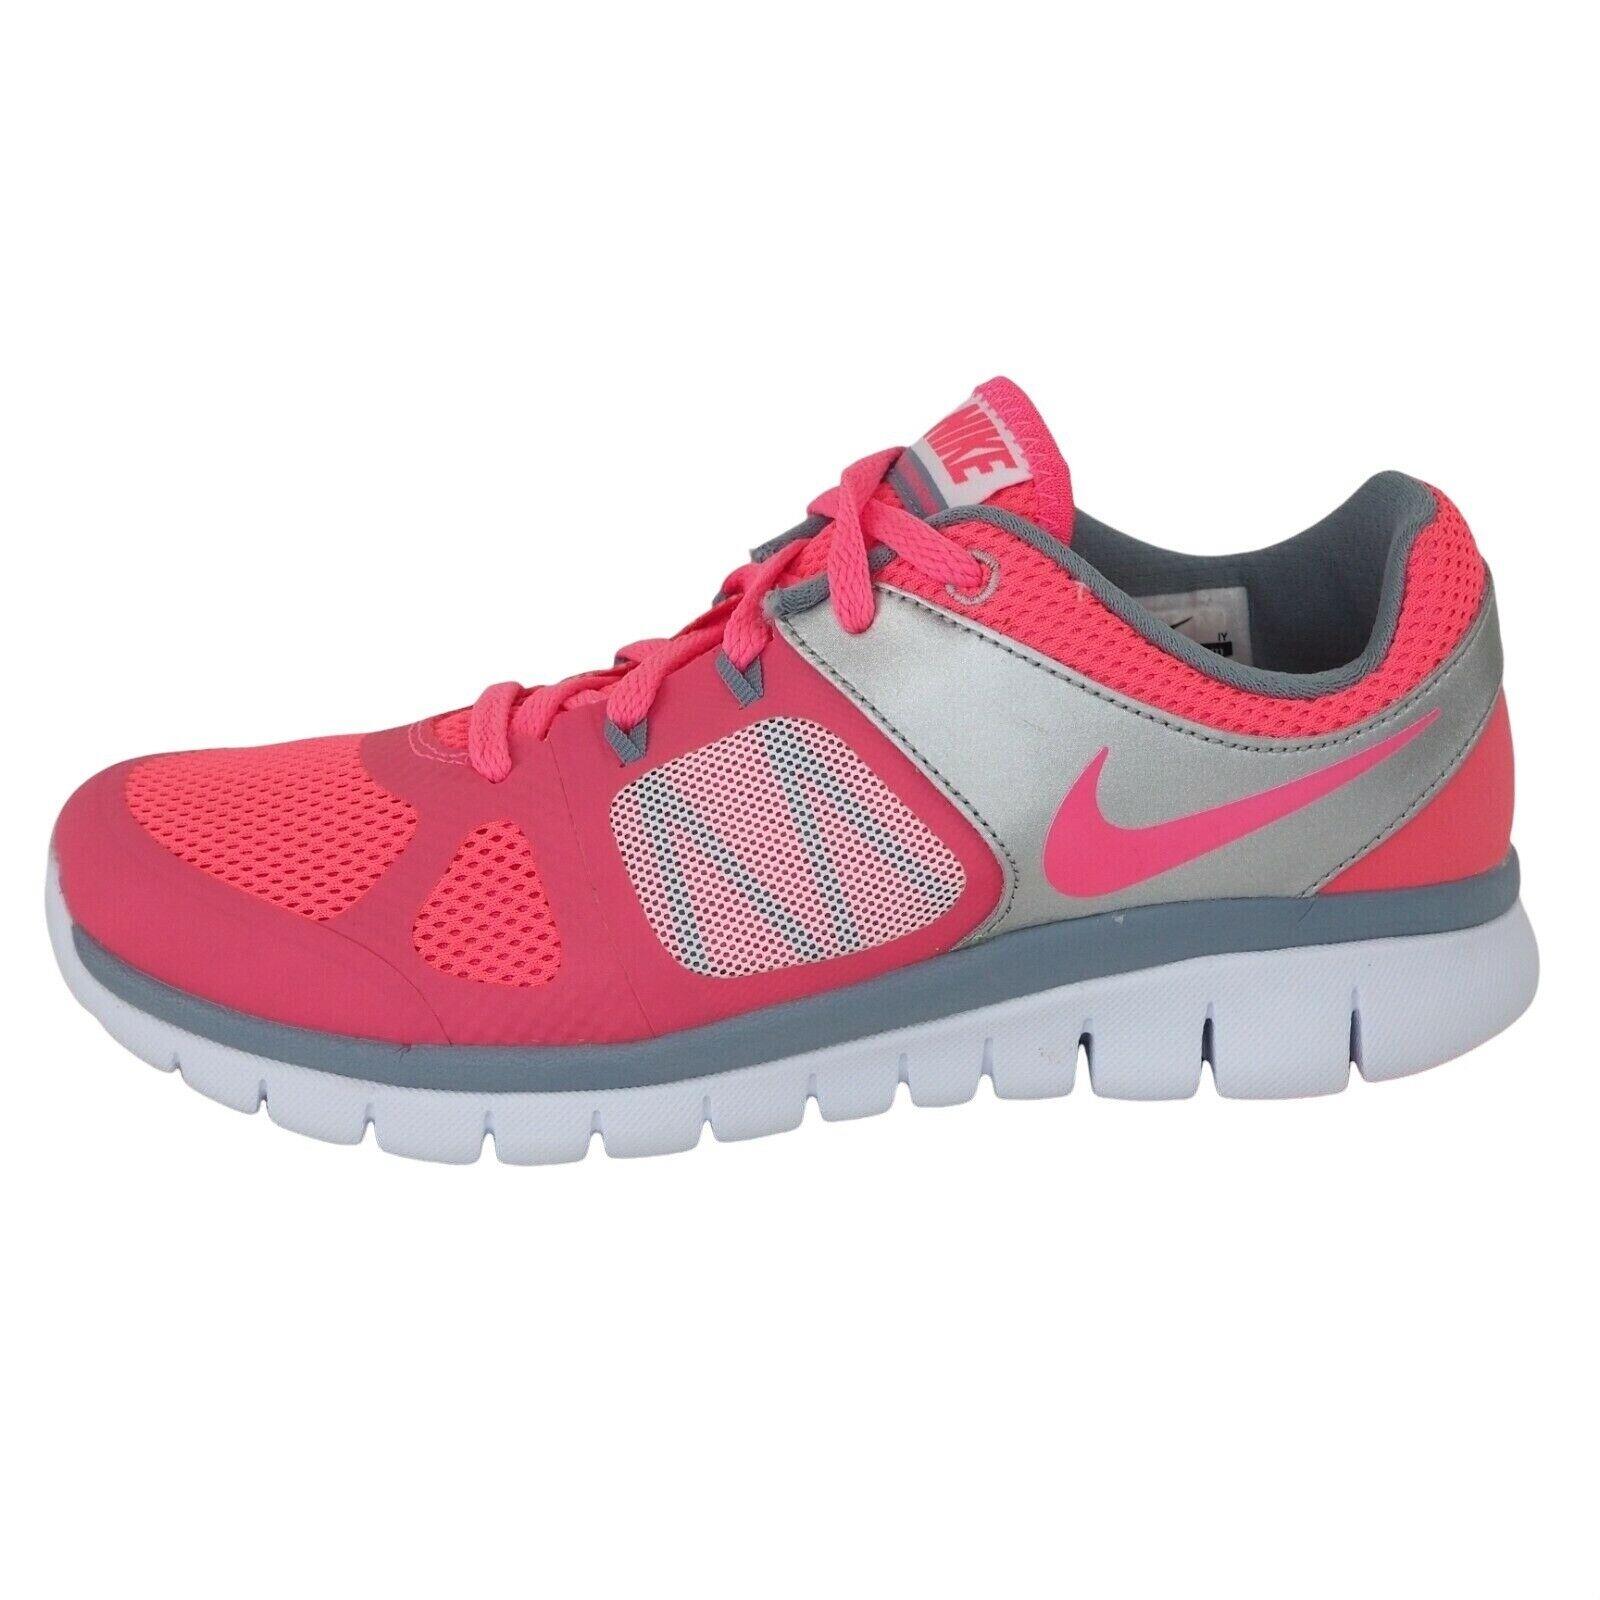 Nike Flex 2014 Running Walking Pink Gray Shoes SZ Girls 5Y = 6.5 Wmns 642755 601